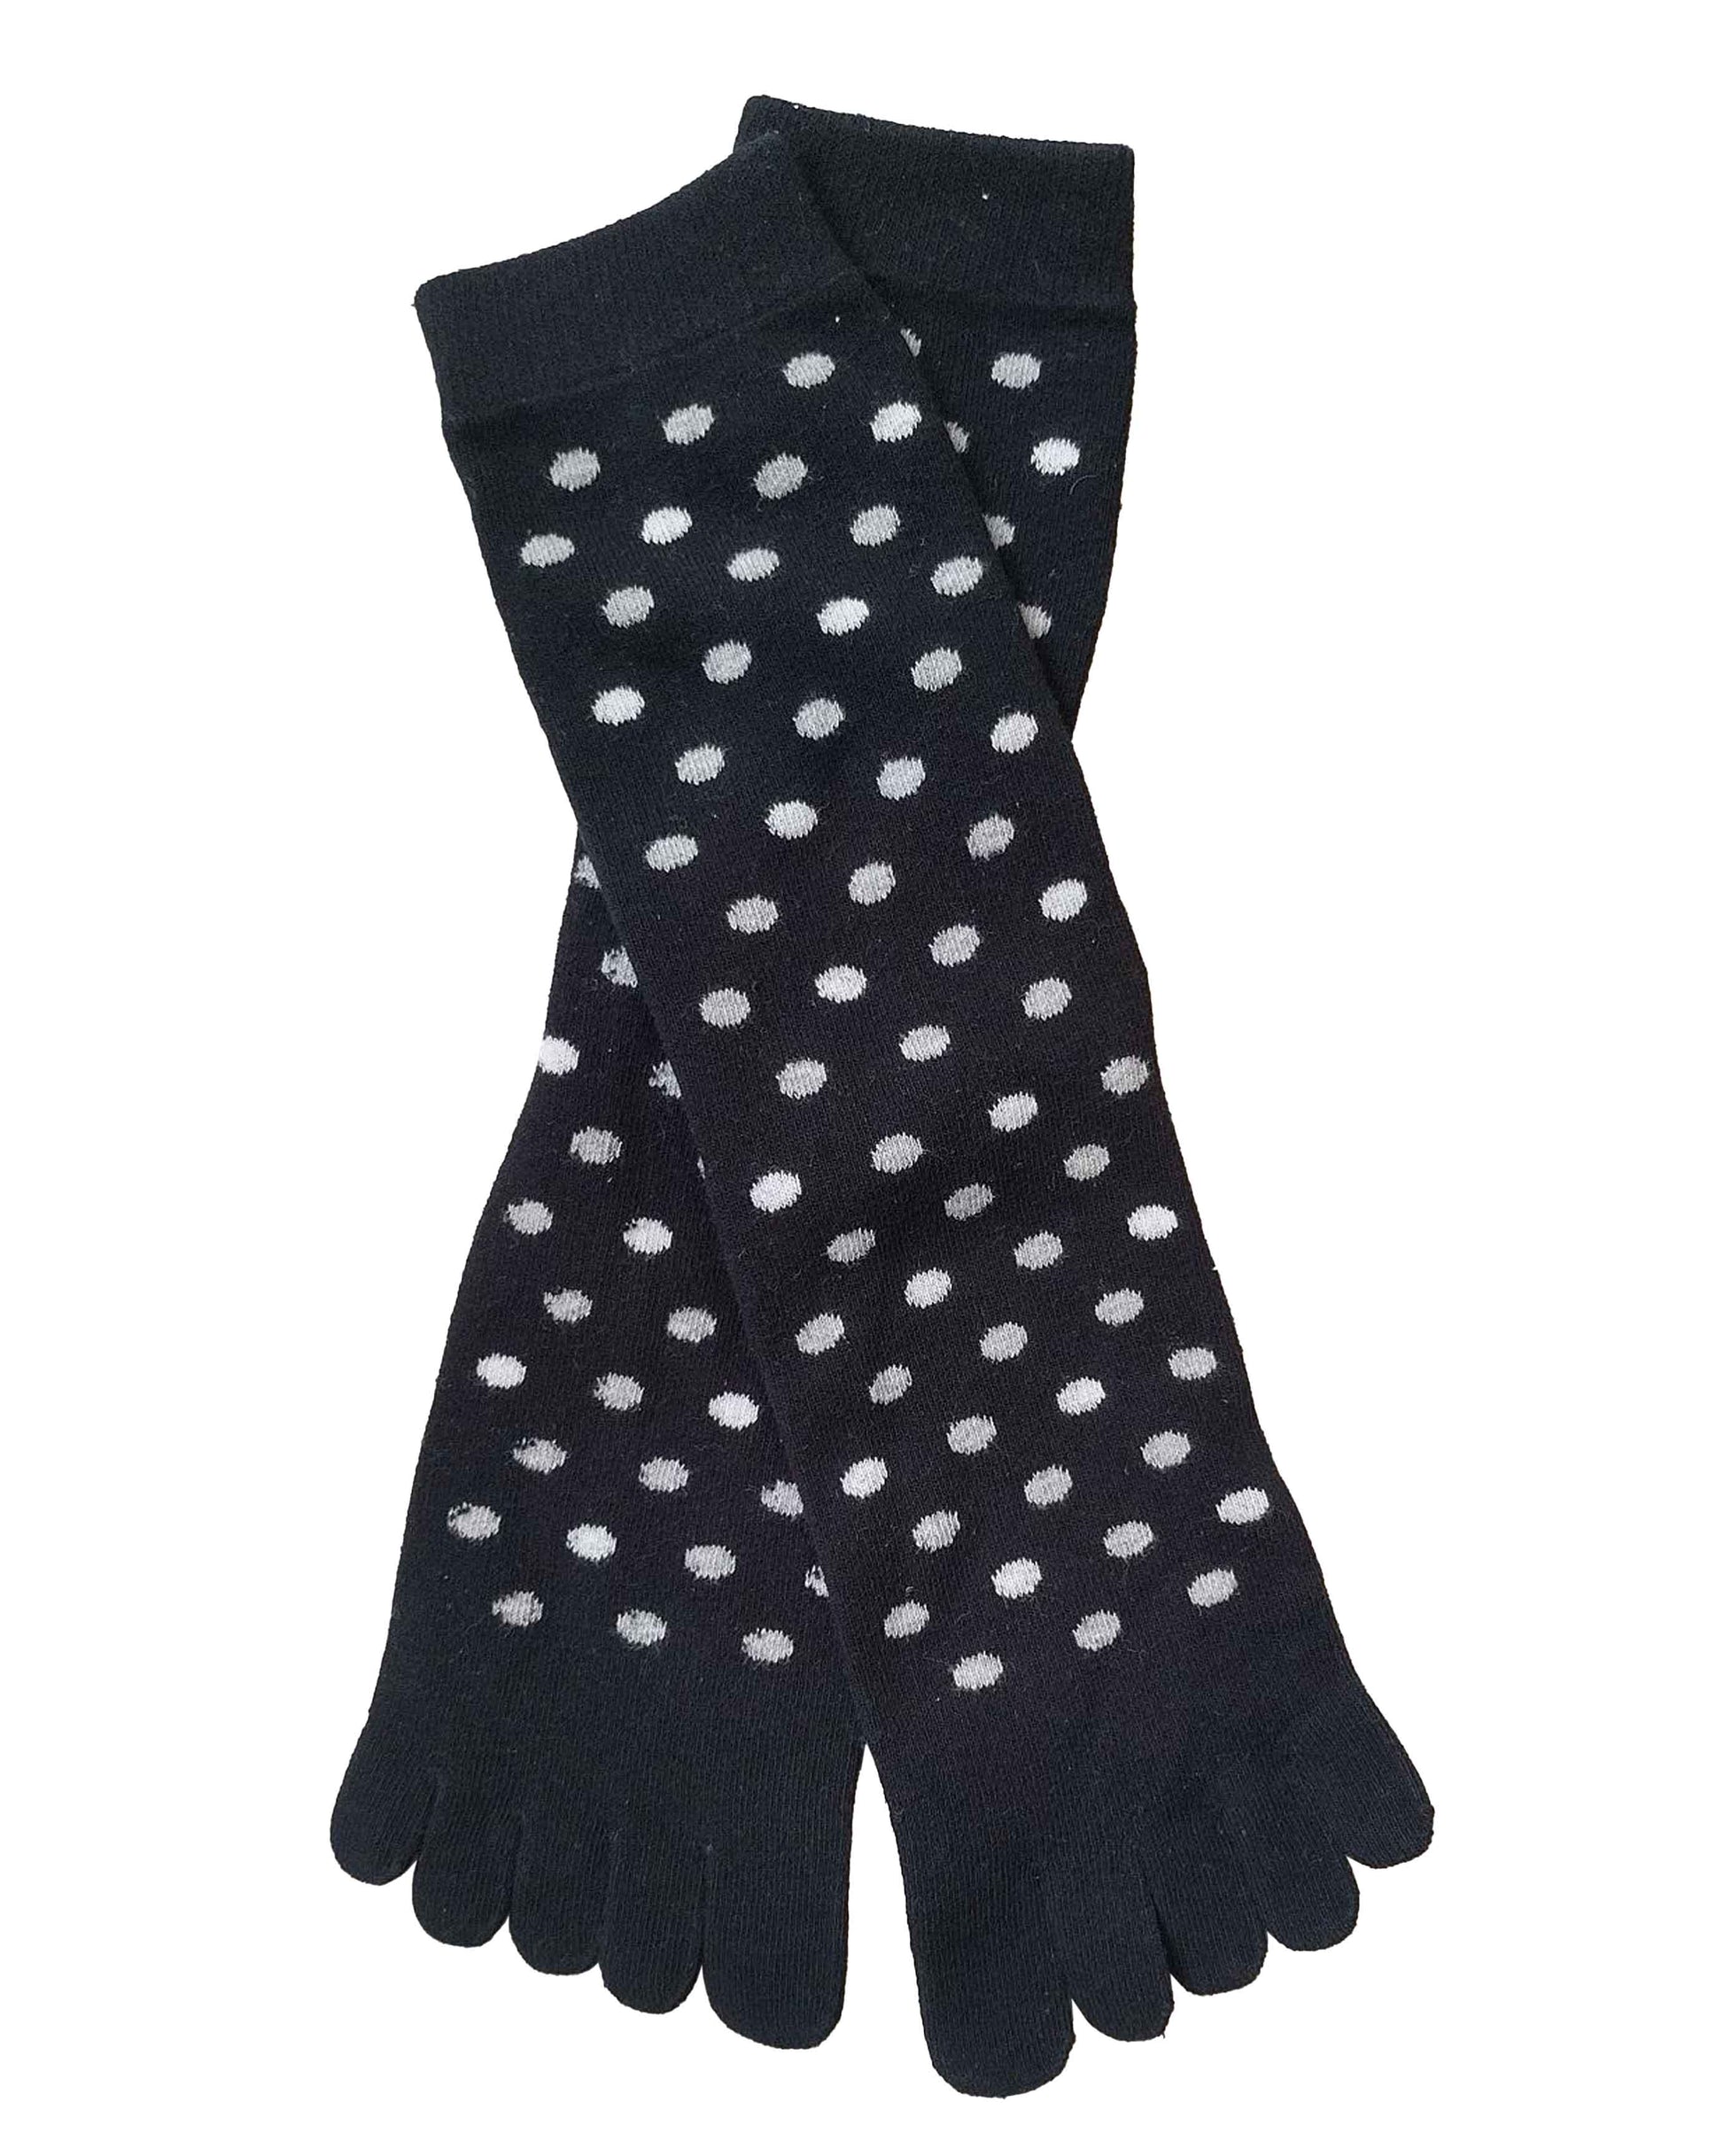 Bonnie Doon Dots Toe Socks - Black cotton toe socks with a white polka dot pattern.